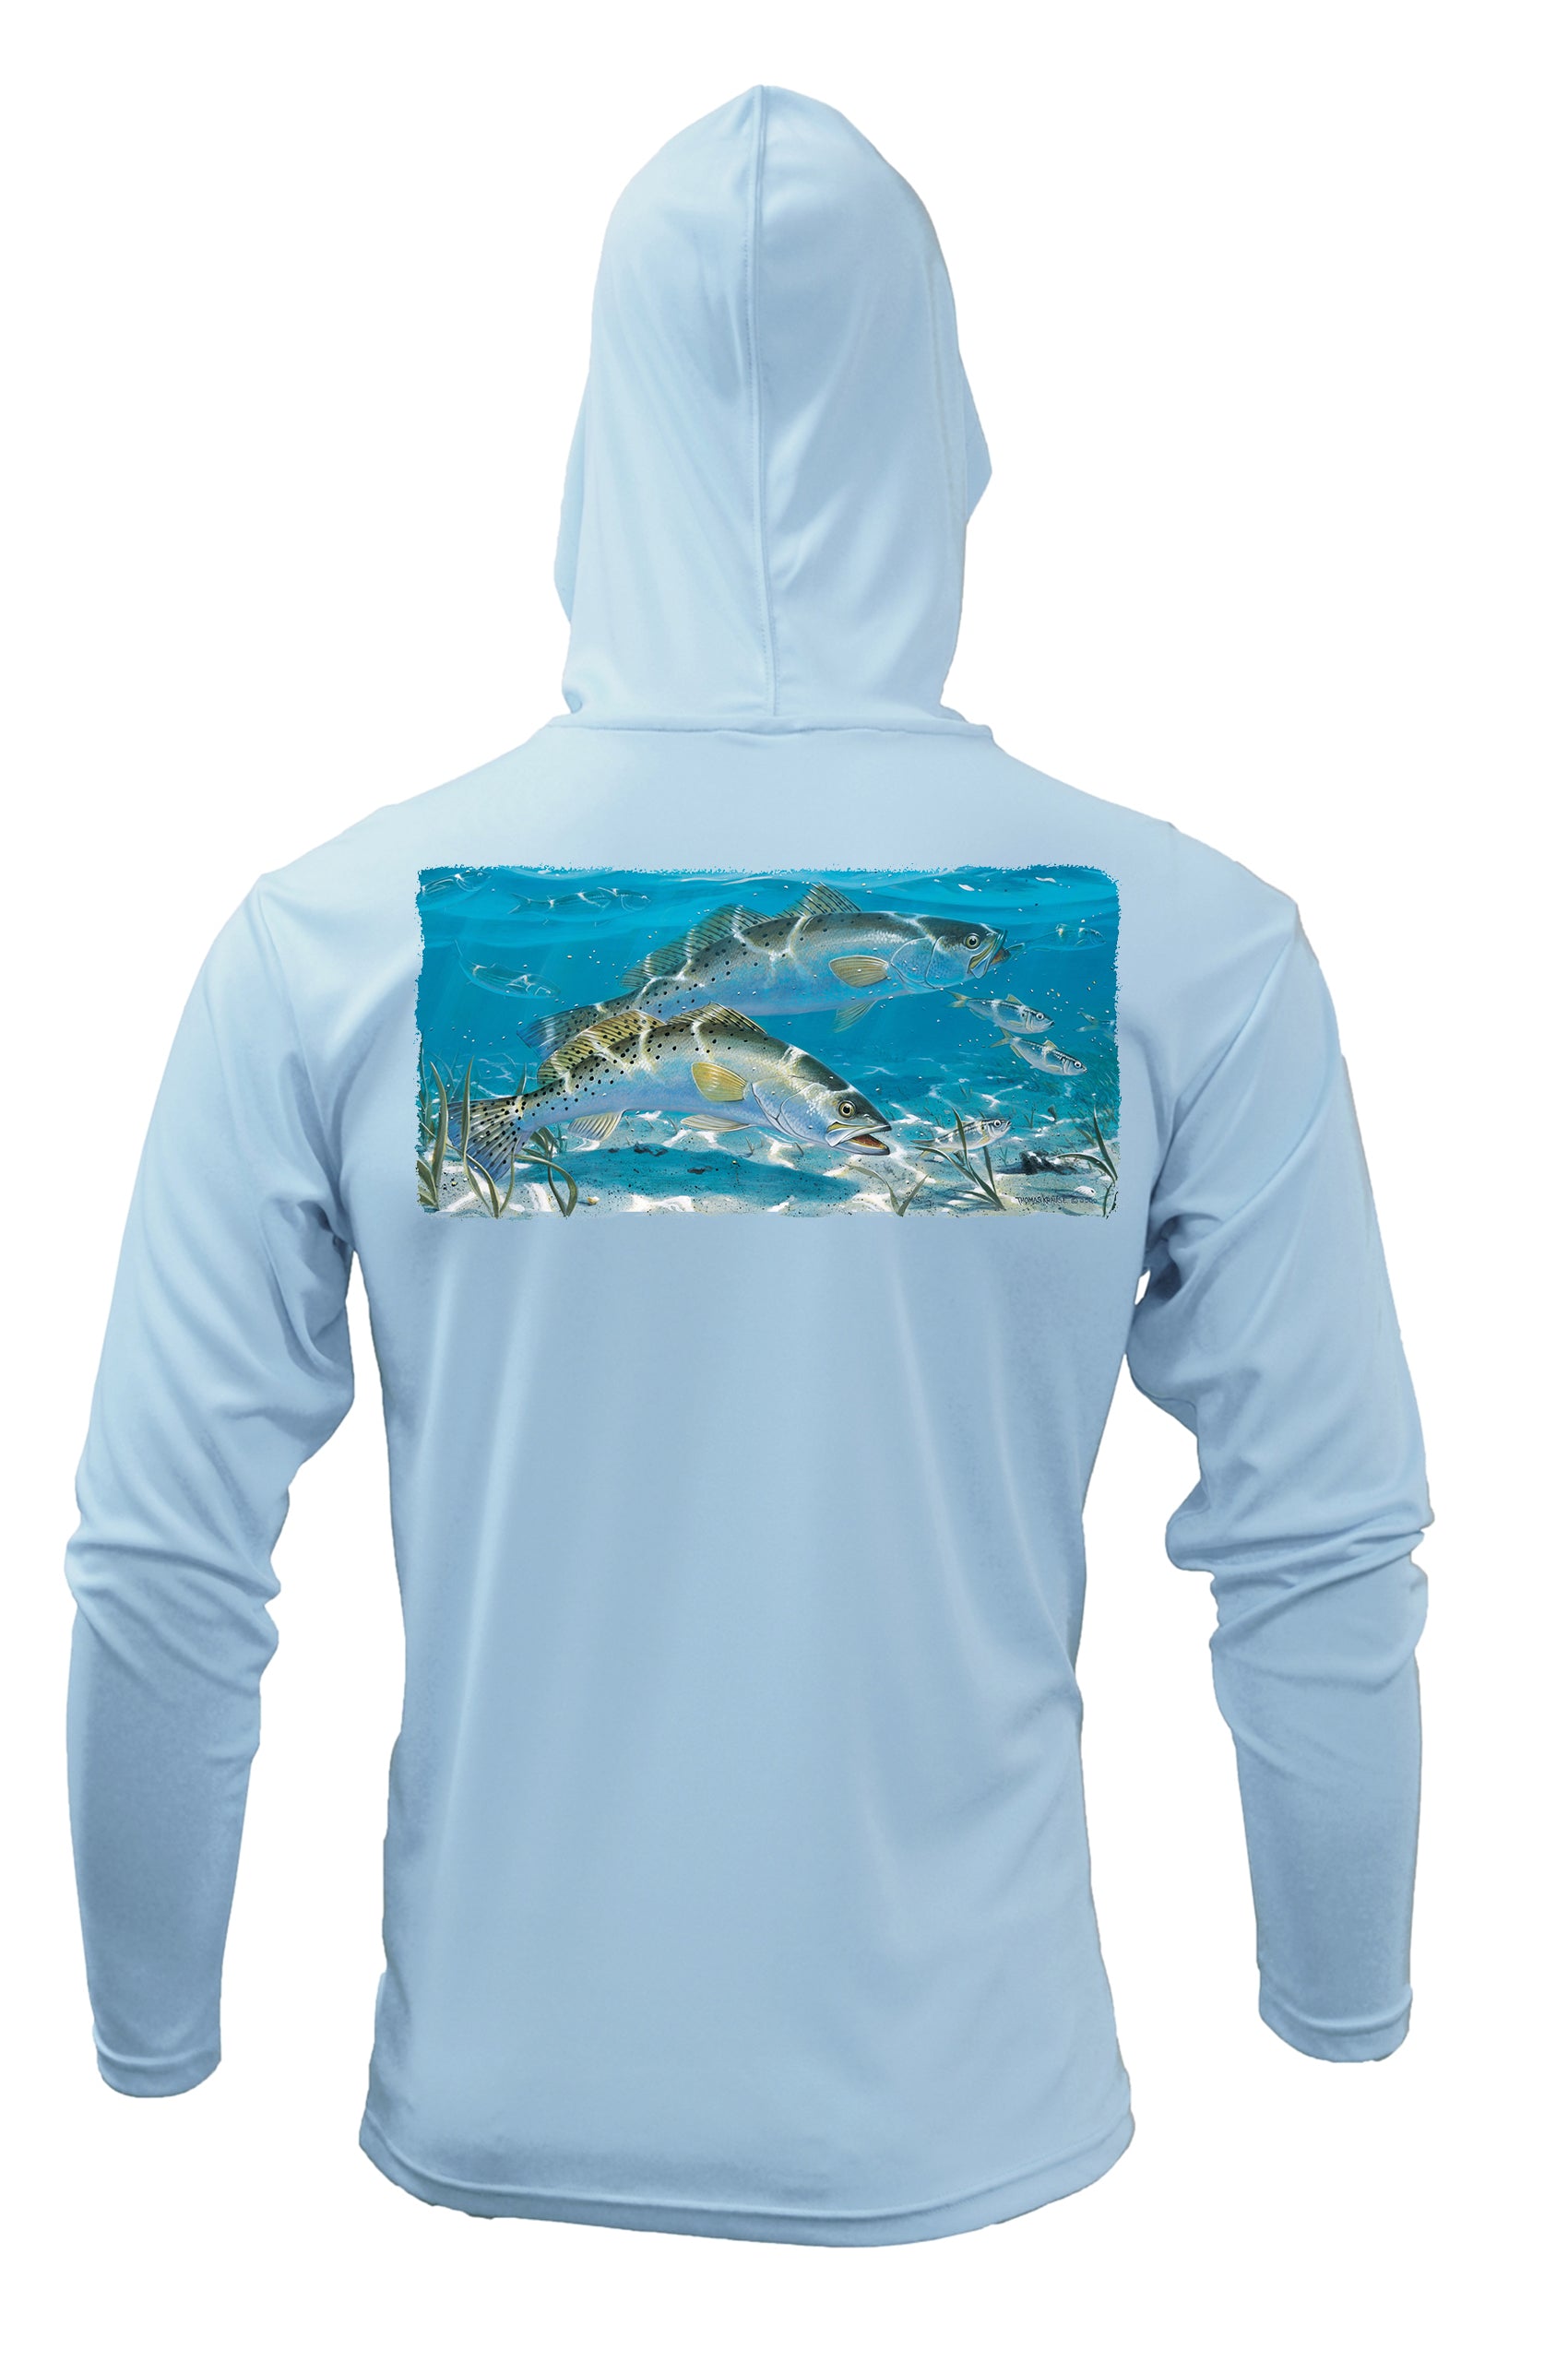 Fish Island Fishing Hoodie, Pullover Sweatshirt, Fly Fishing Shirt